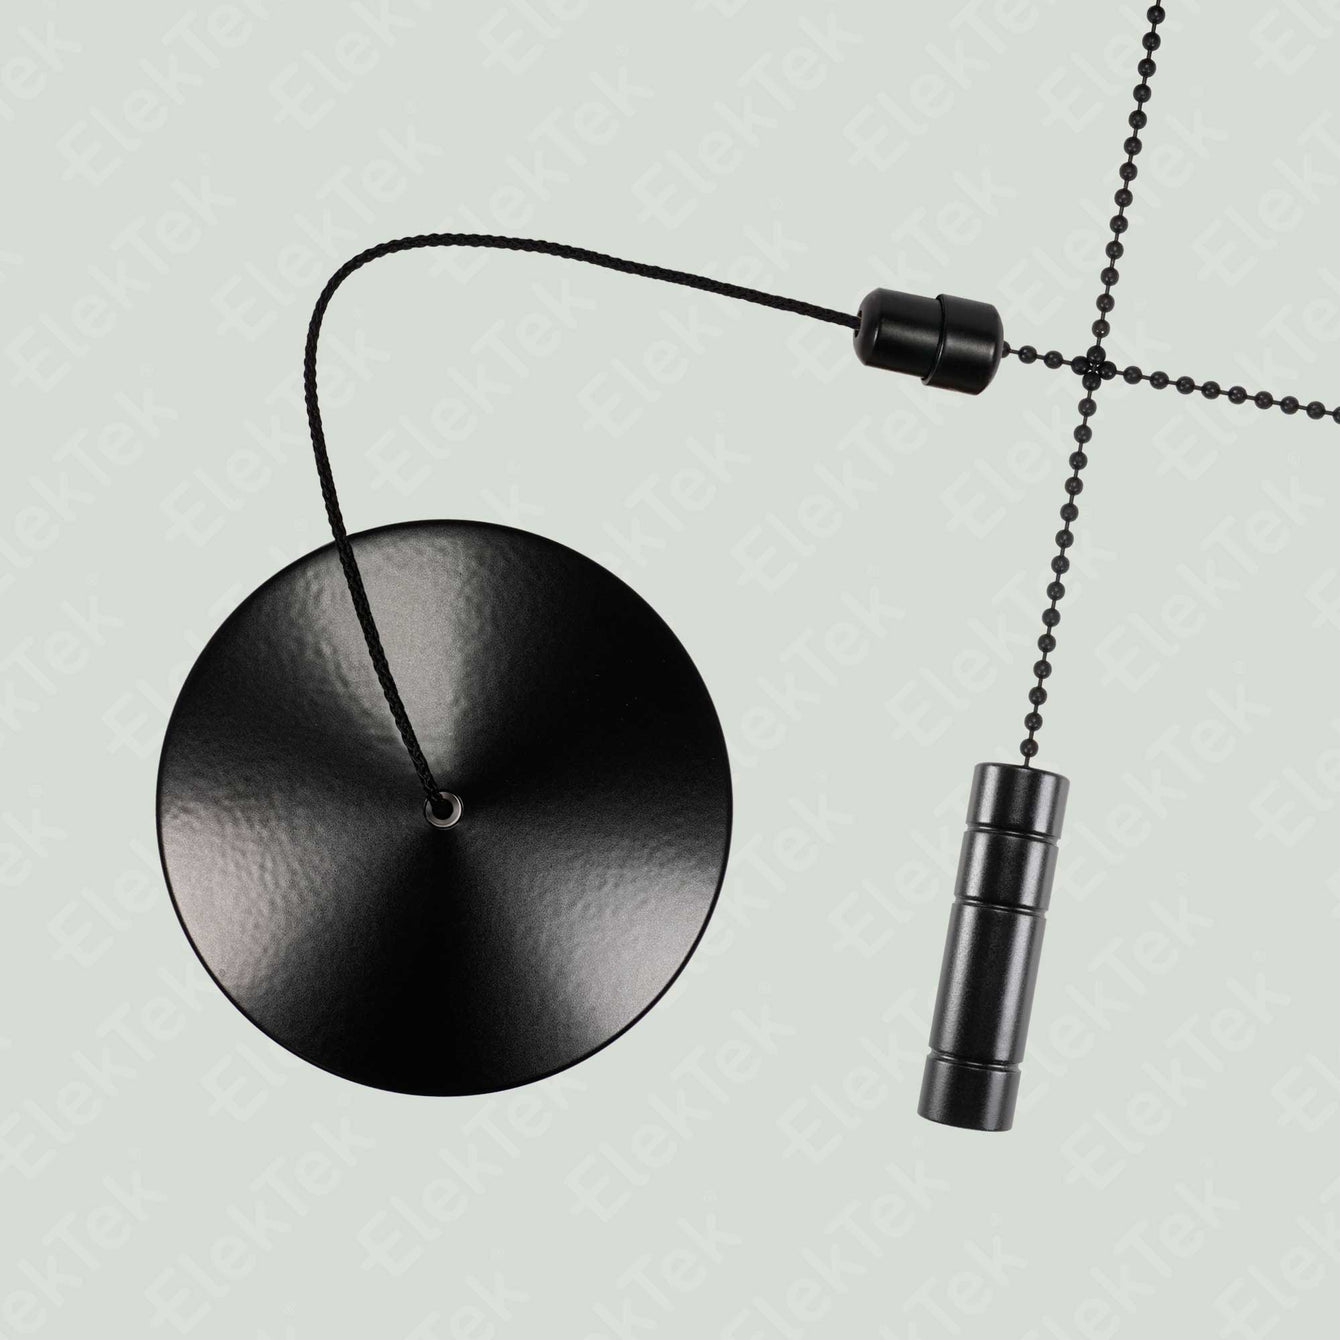 ElekTek Premium Black Bathroom Light Pull Cord Switch Kit with Pull Chain Handle 